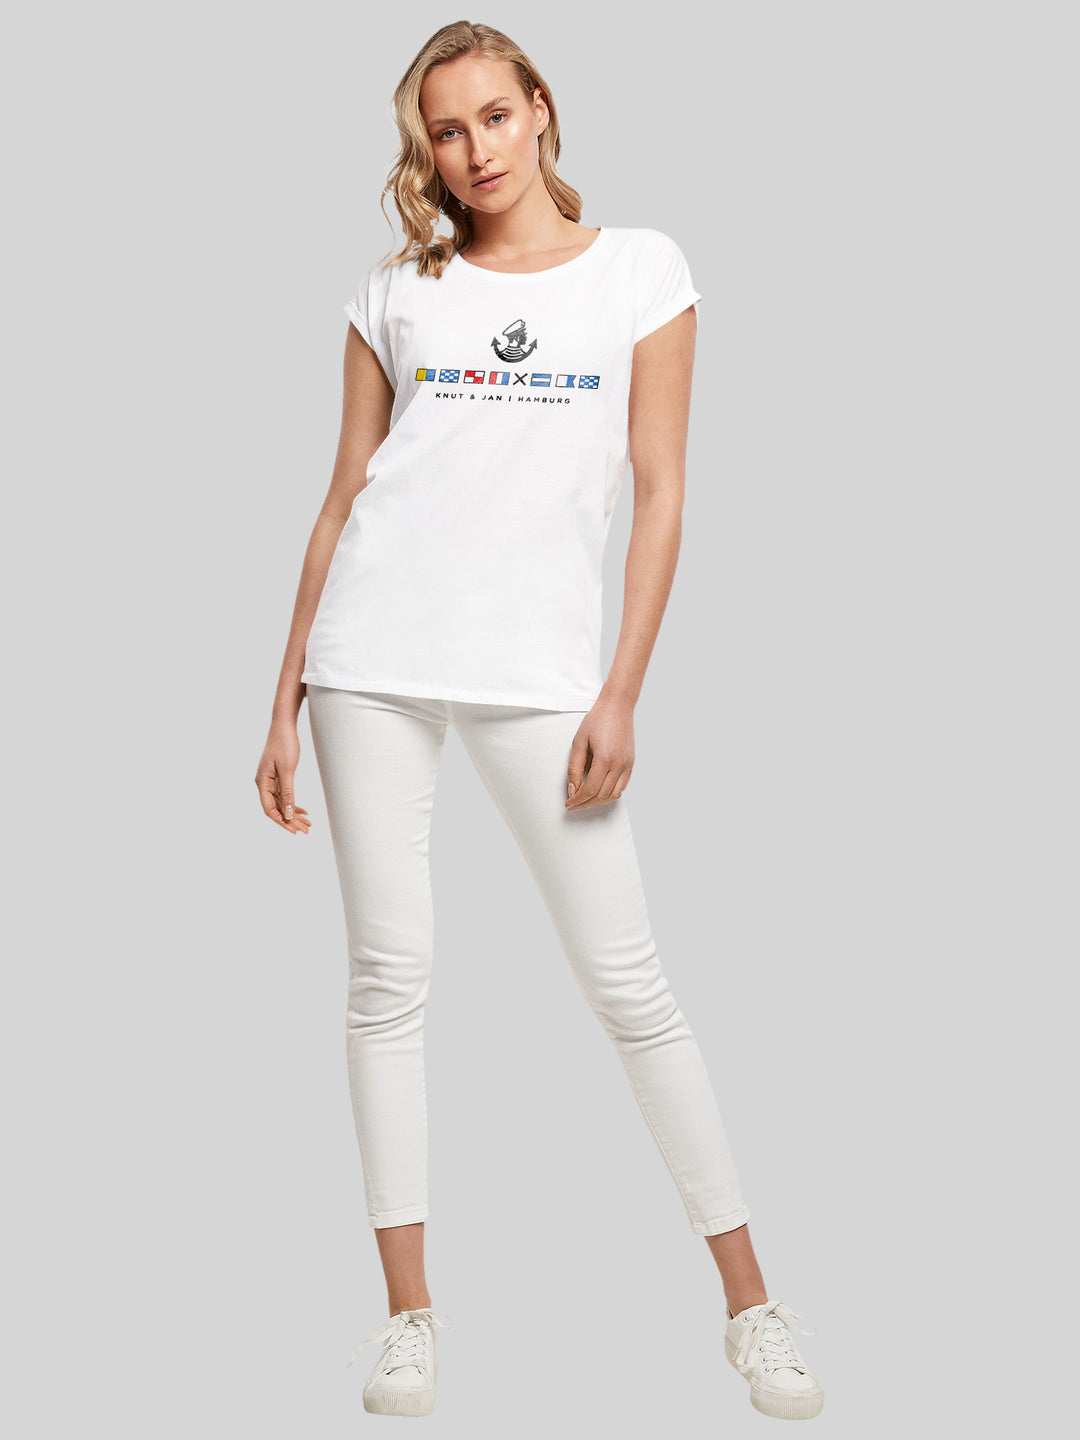 MALIN | T-Shirt Damen Seglerfahnen